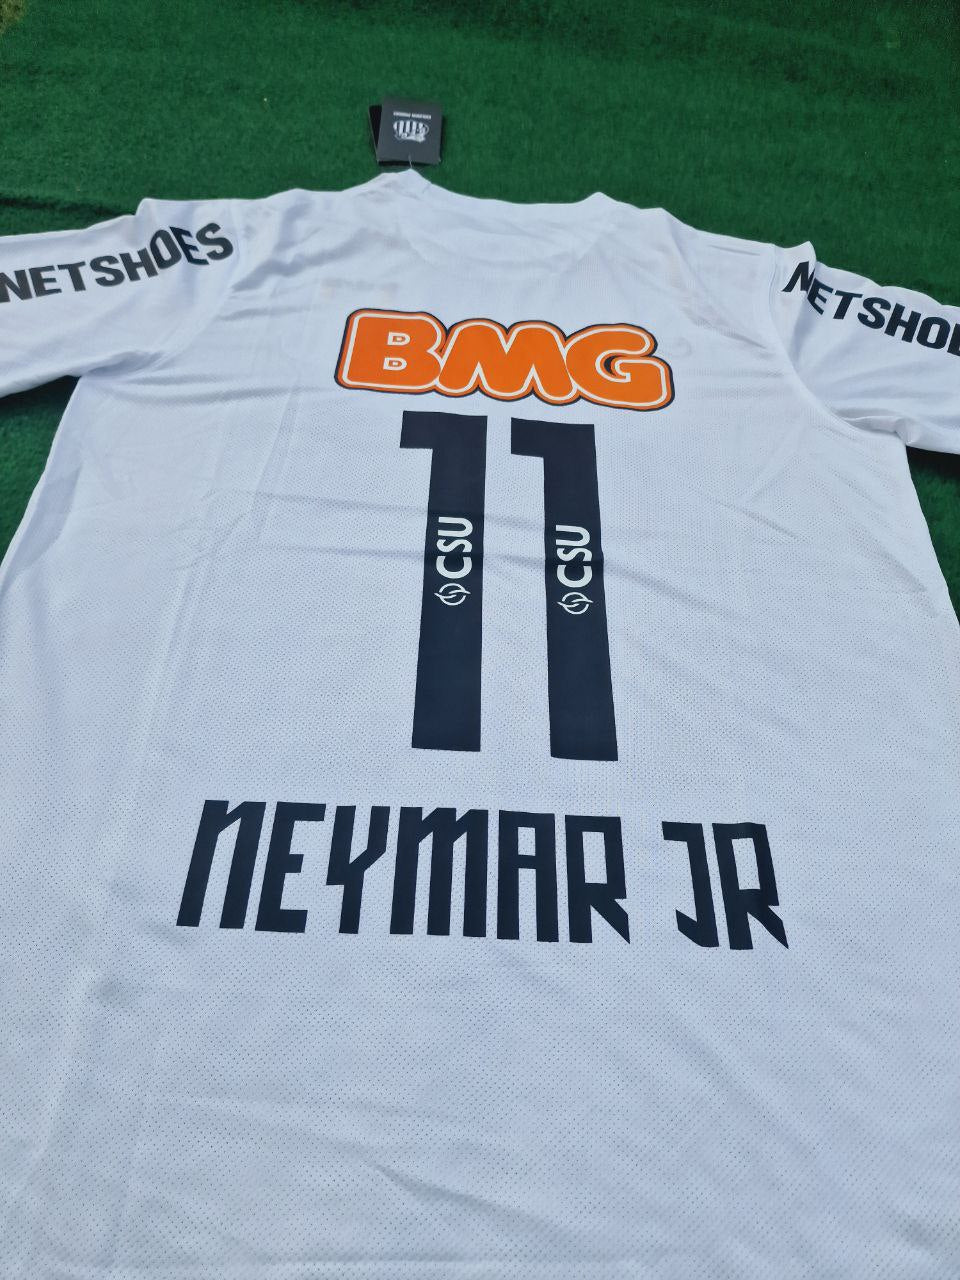 Neymar Jr Santos Fc White Retro Football Jersey